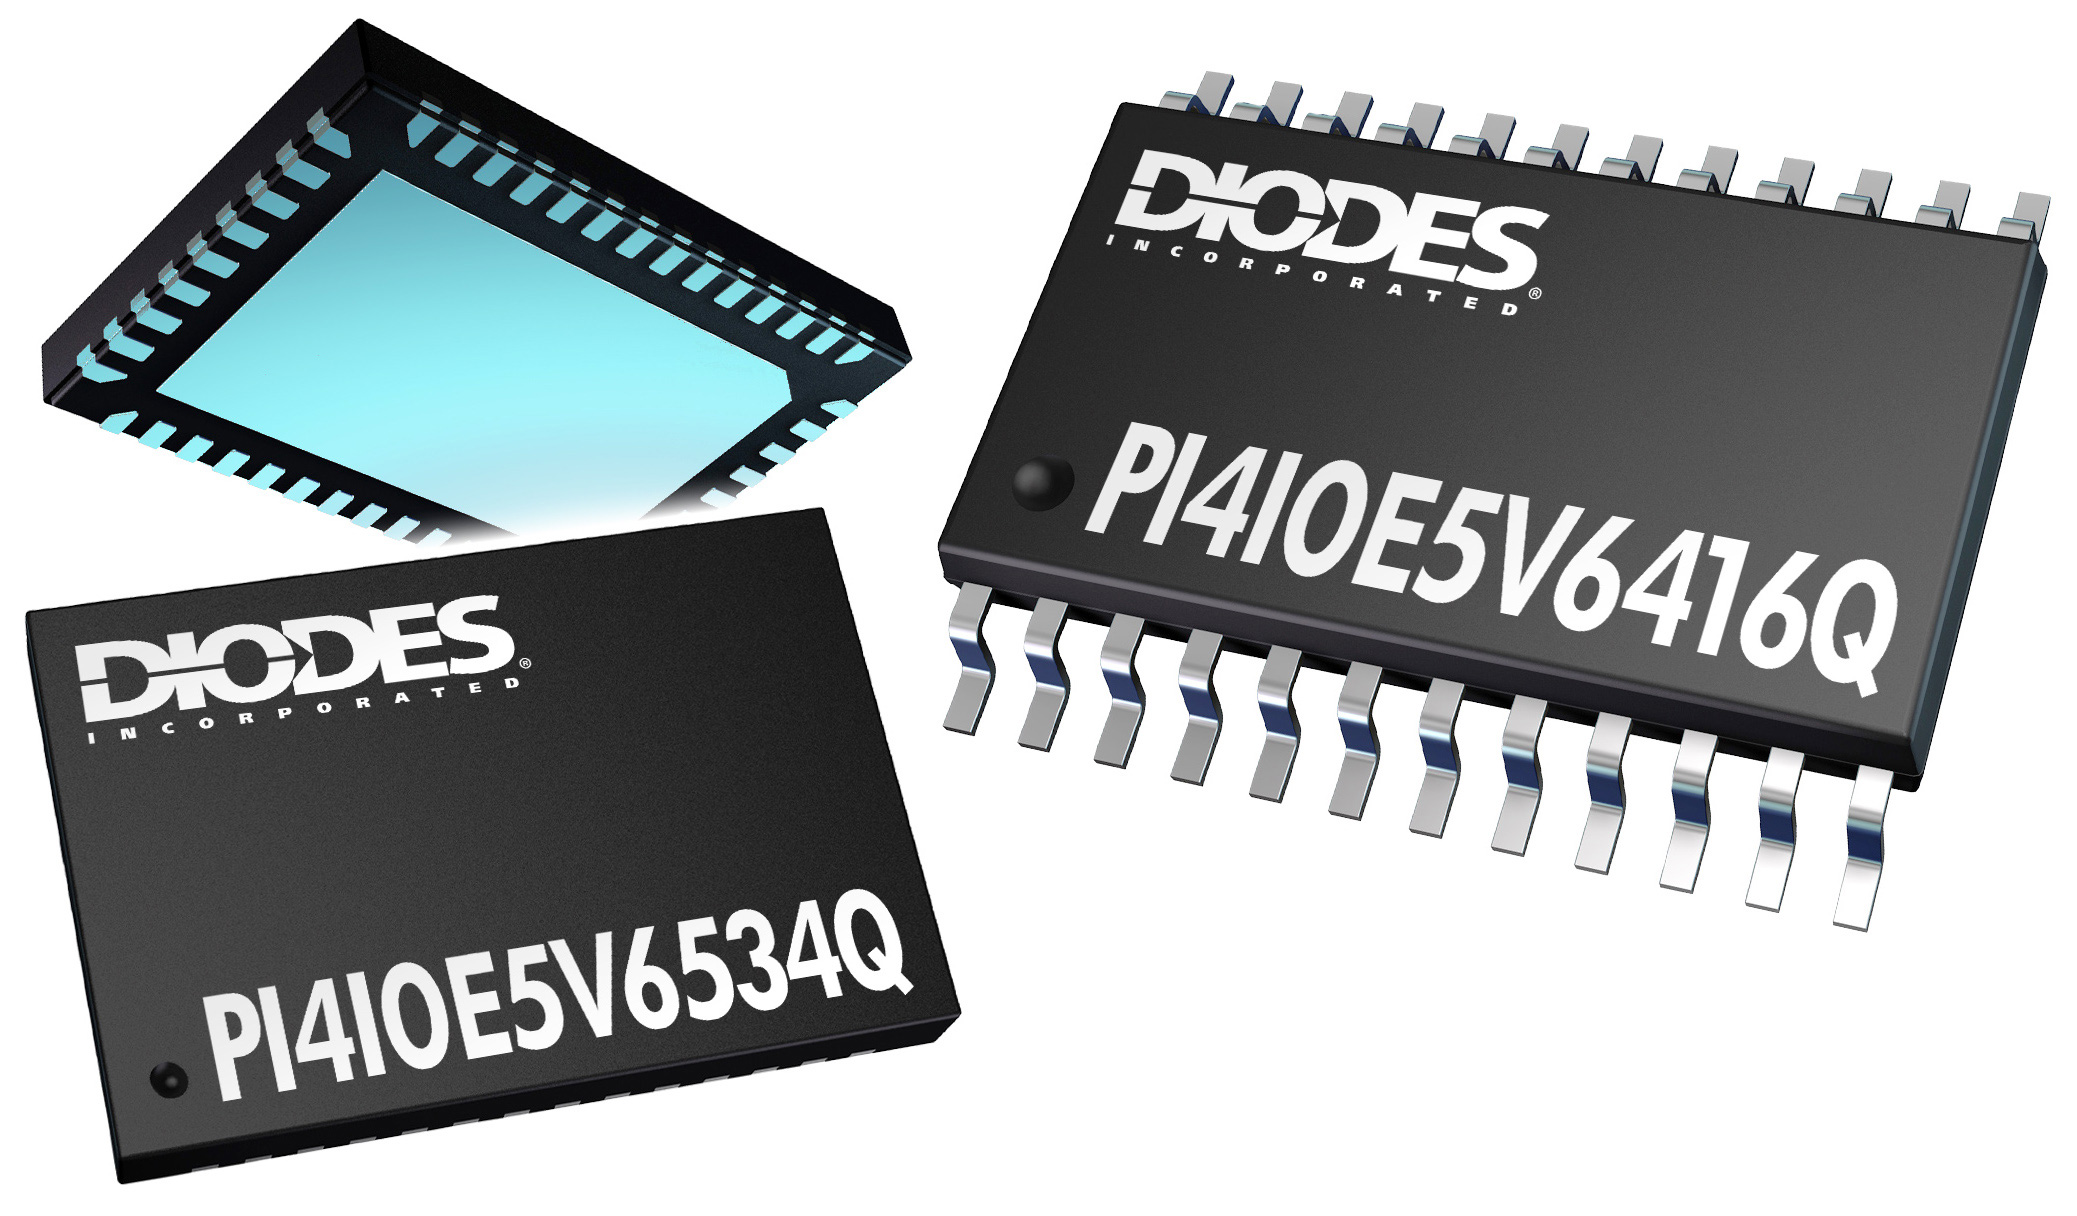 Image of Diodes PI4IOE5V6416Q/PI4IOE5V6534Q: Automotive-Compliant I2C General-Purpose I/O Expanders with Level-Shifters